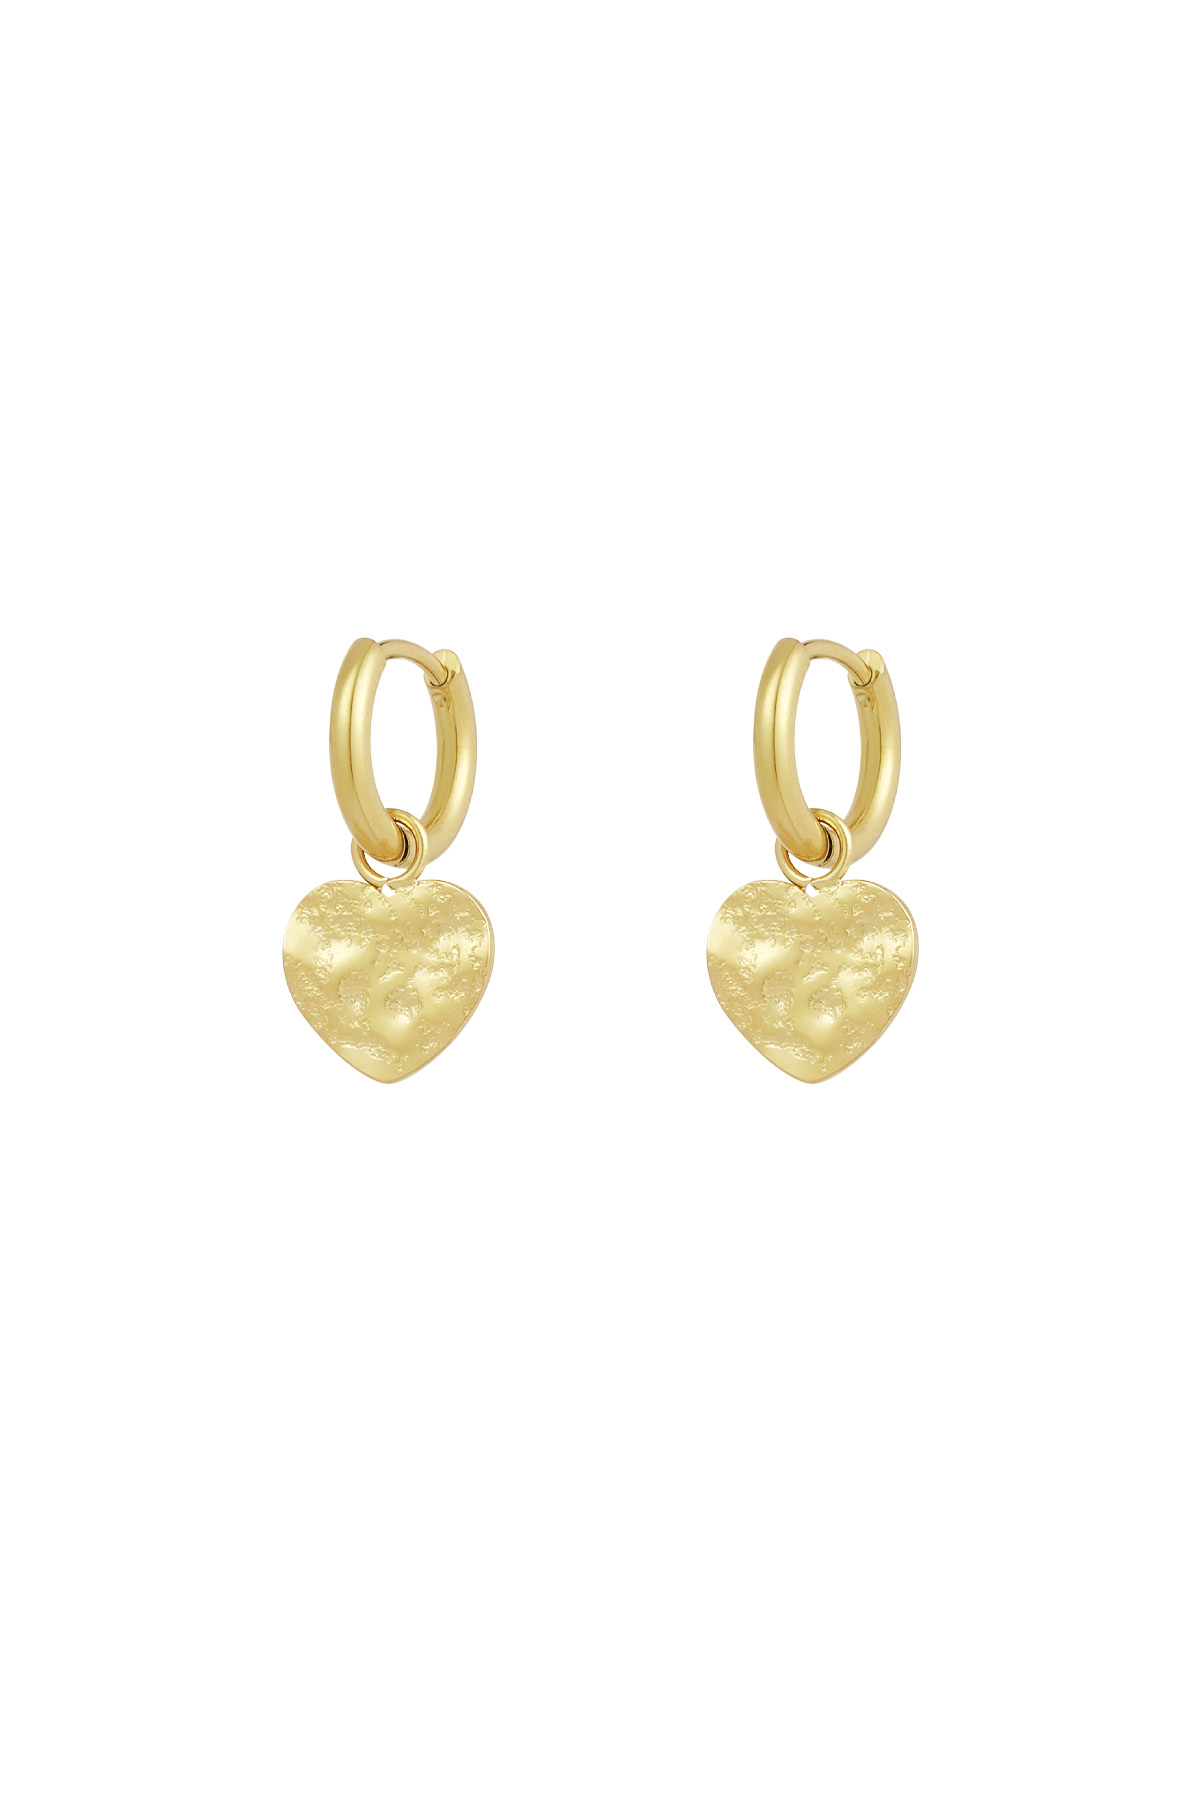 Earrings heart for you - gold